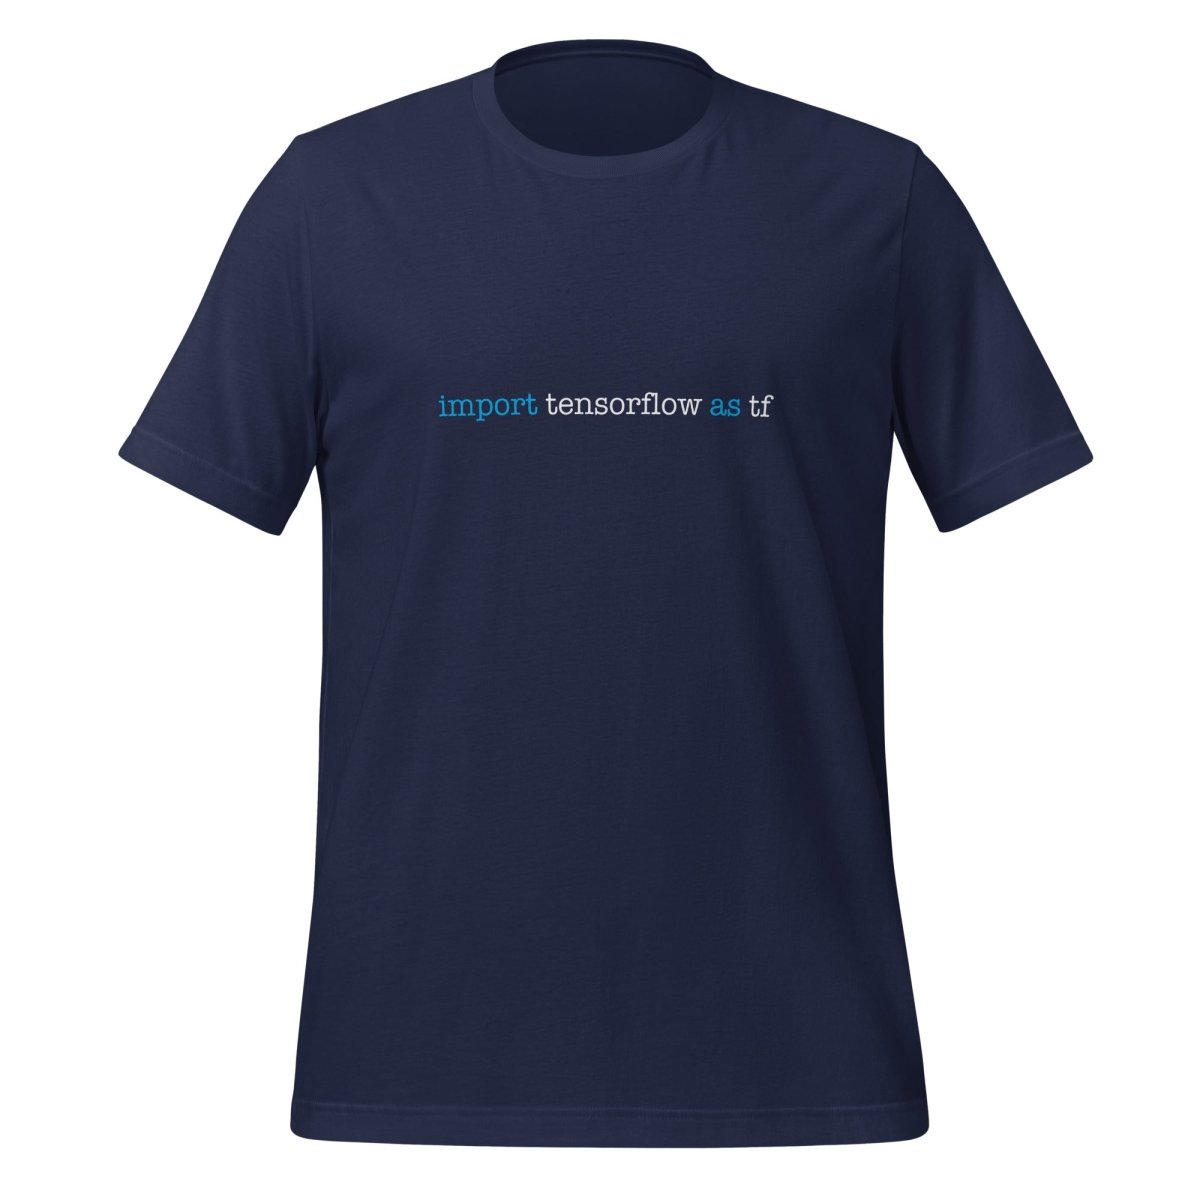 import tensorflow as tf T - Shirt 1 (unisex) - Navy - AI Store